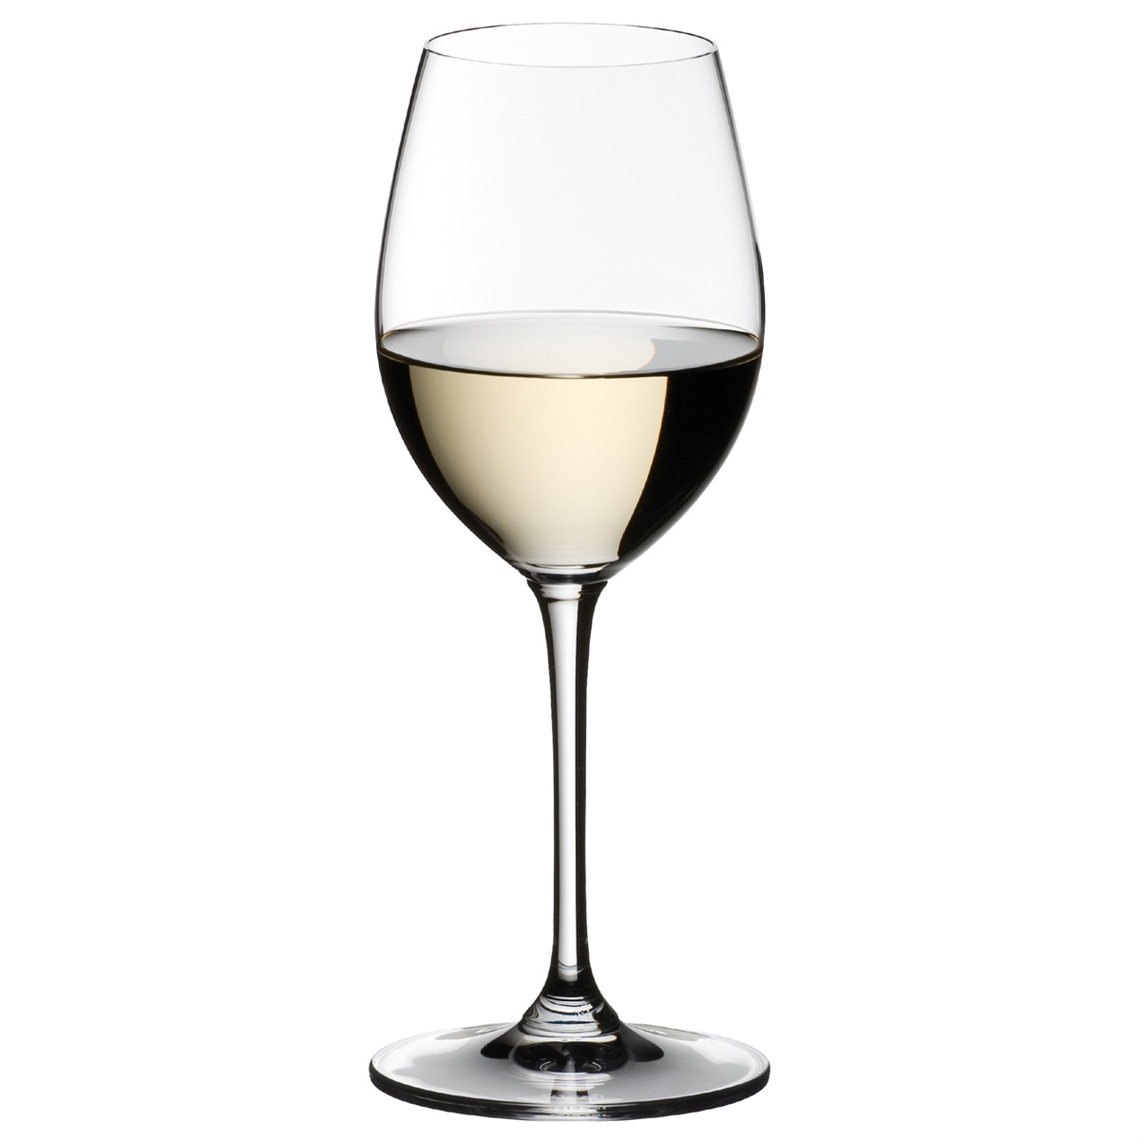 View more burgundy wine glasses from our Dessert Wine Glasses range